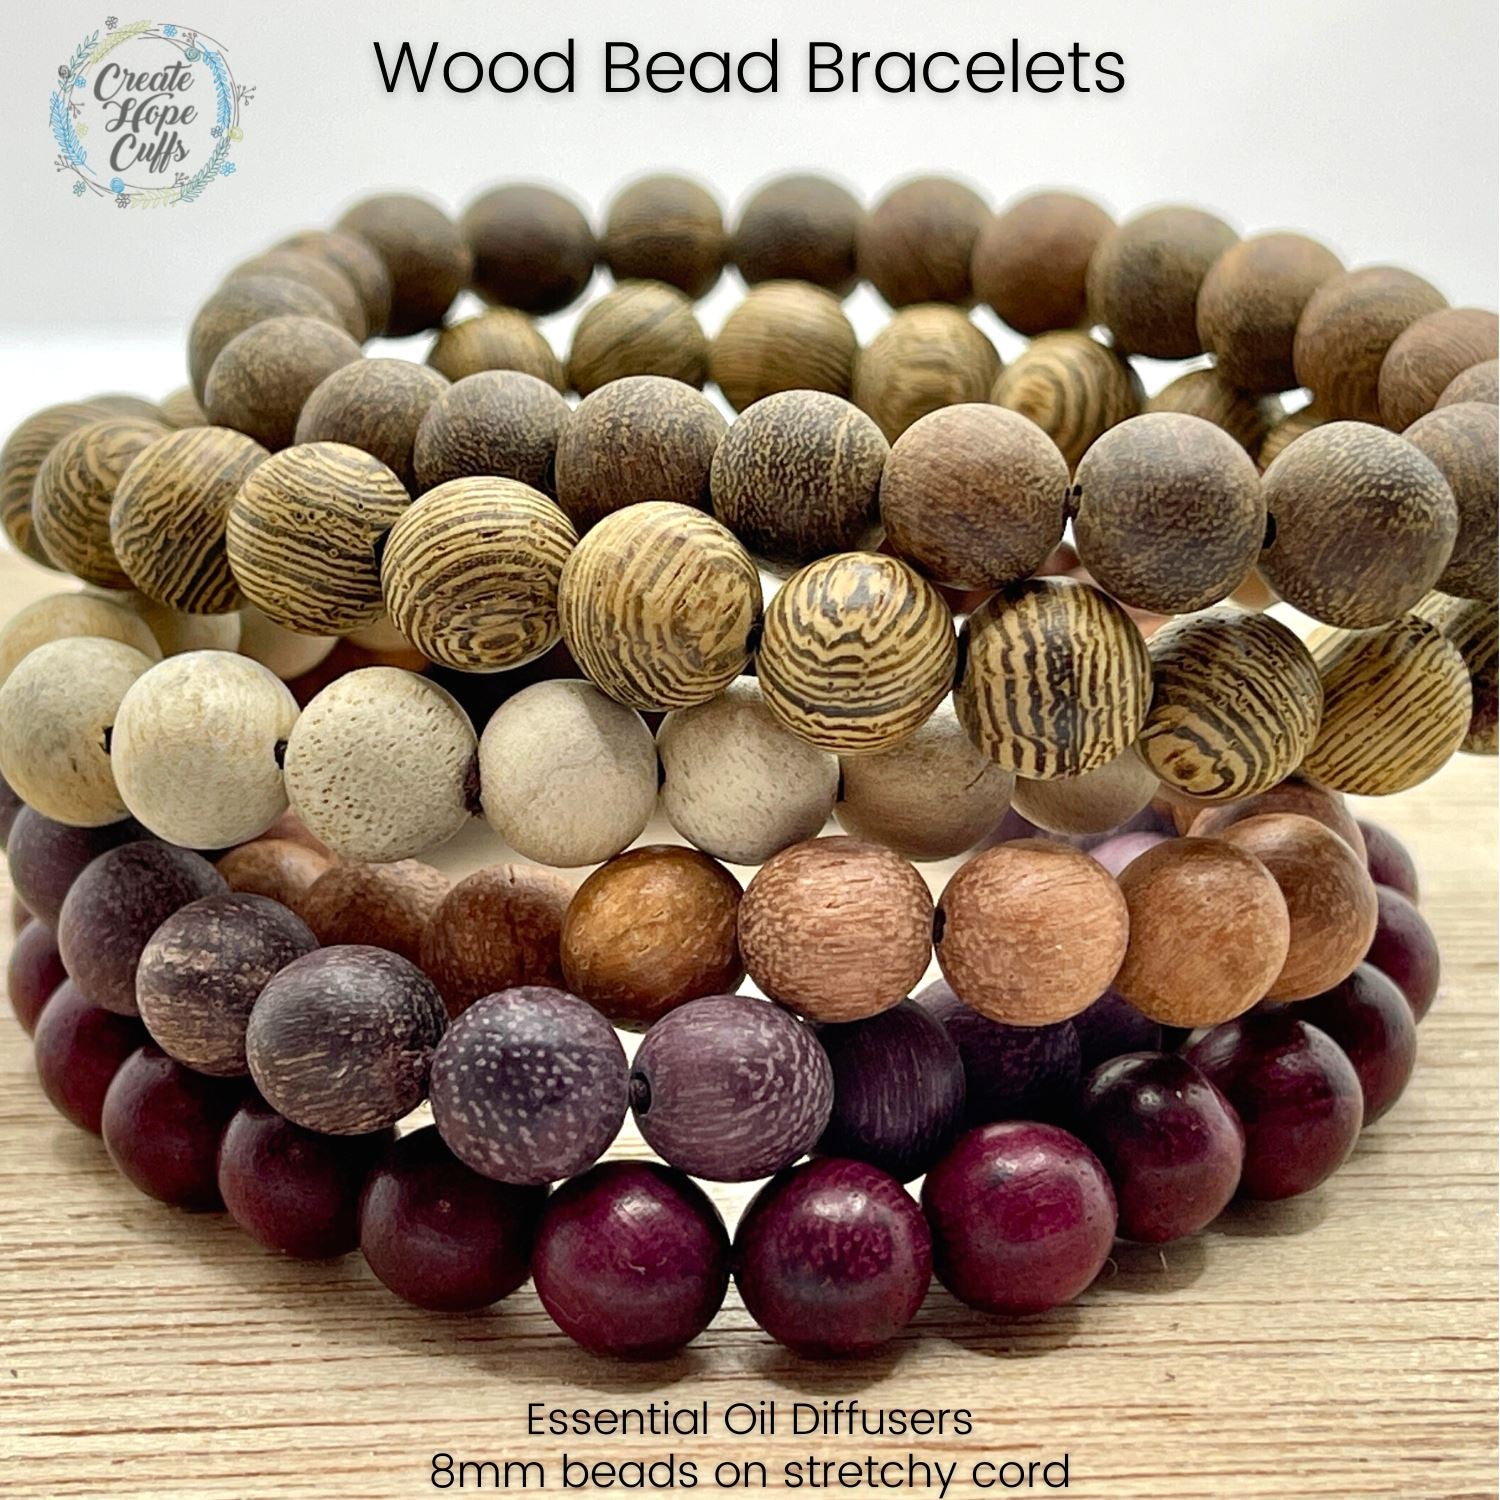 Trendy 18mm Natural Wooden Beads Tibetan Buddhist Meditation Bracelet  Natural | eBay